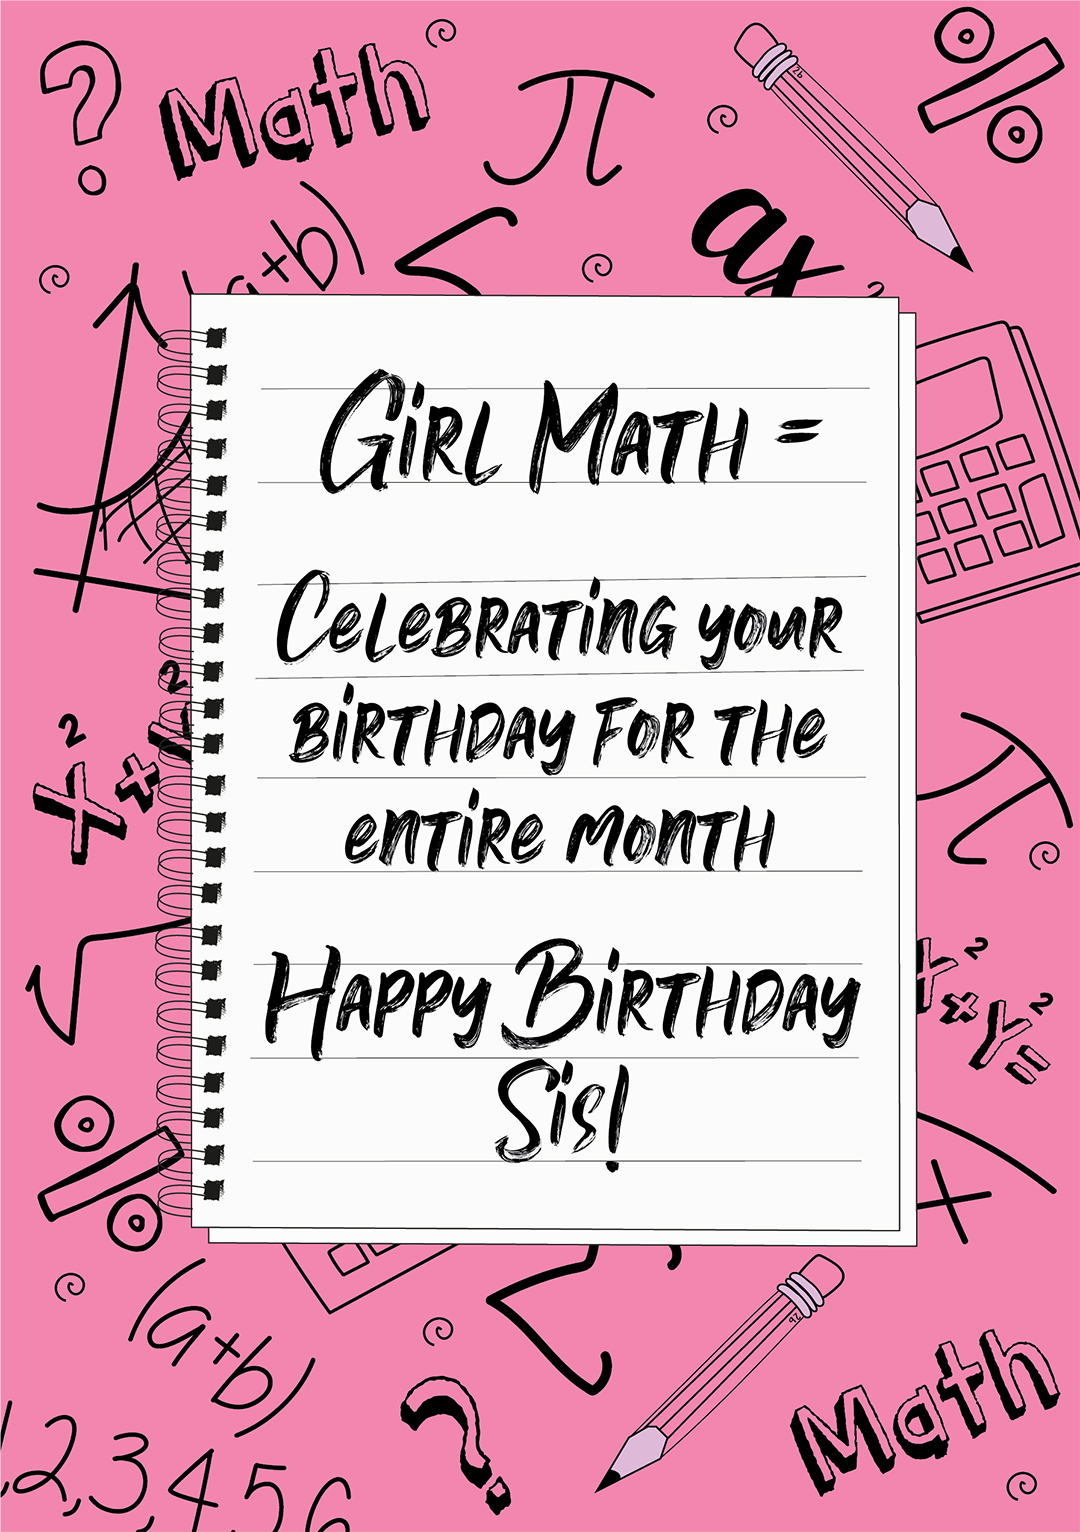 Girl Math - Happy Birthday Sis!